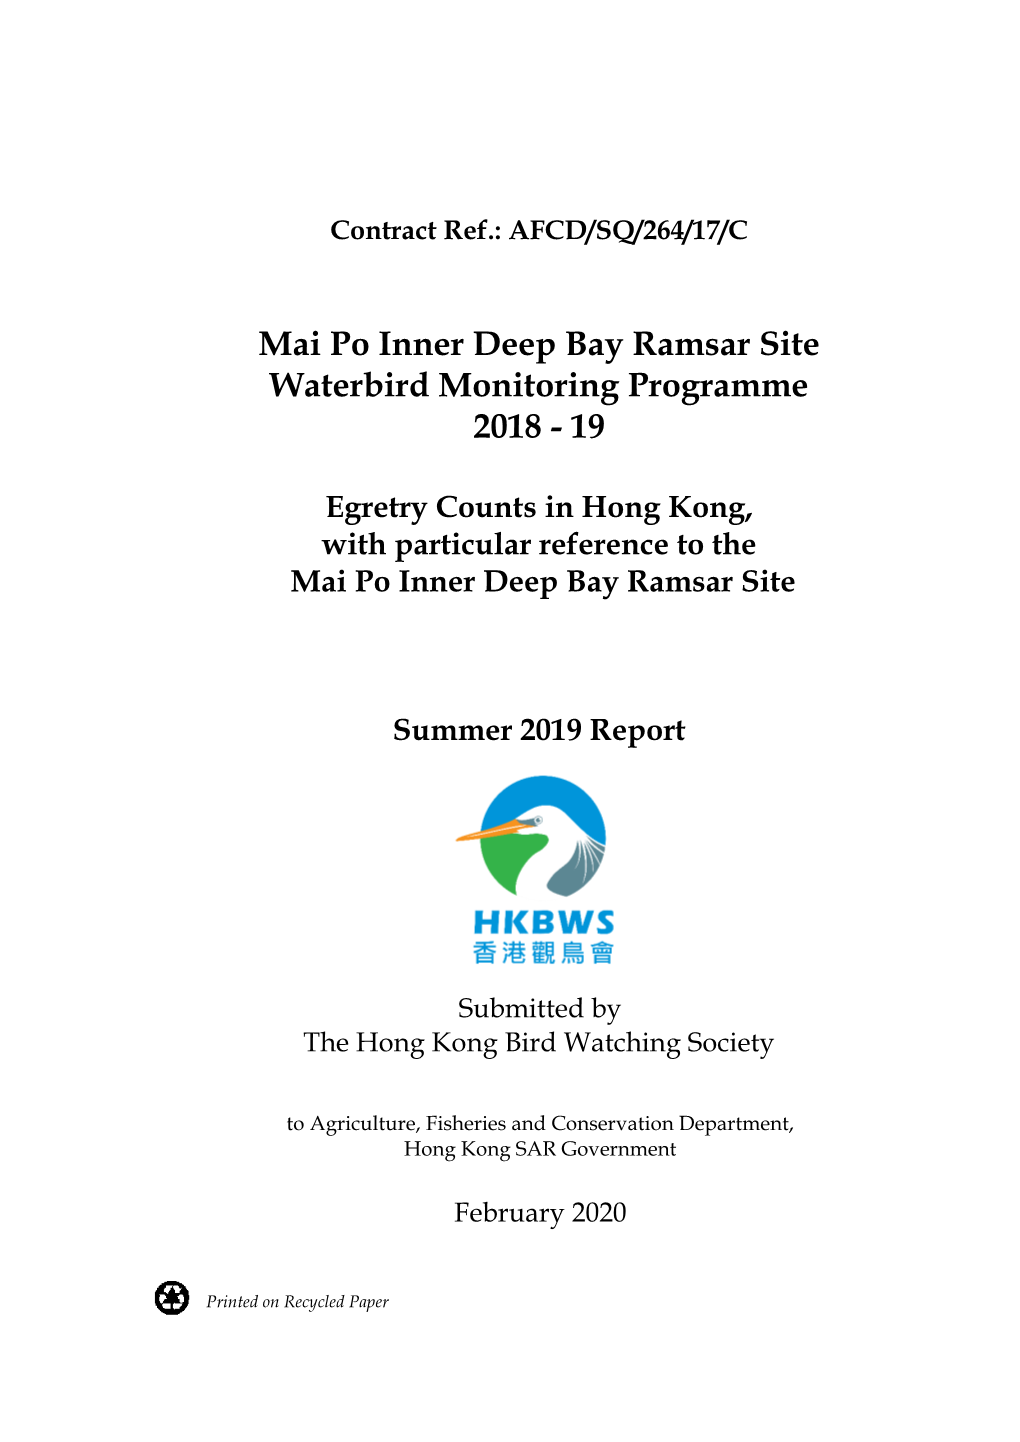 Mai Po Inner Deep Bay Ramsar Site Waterbird Monitoring Programme 2018 - 19